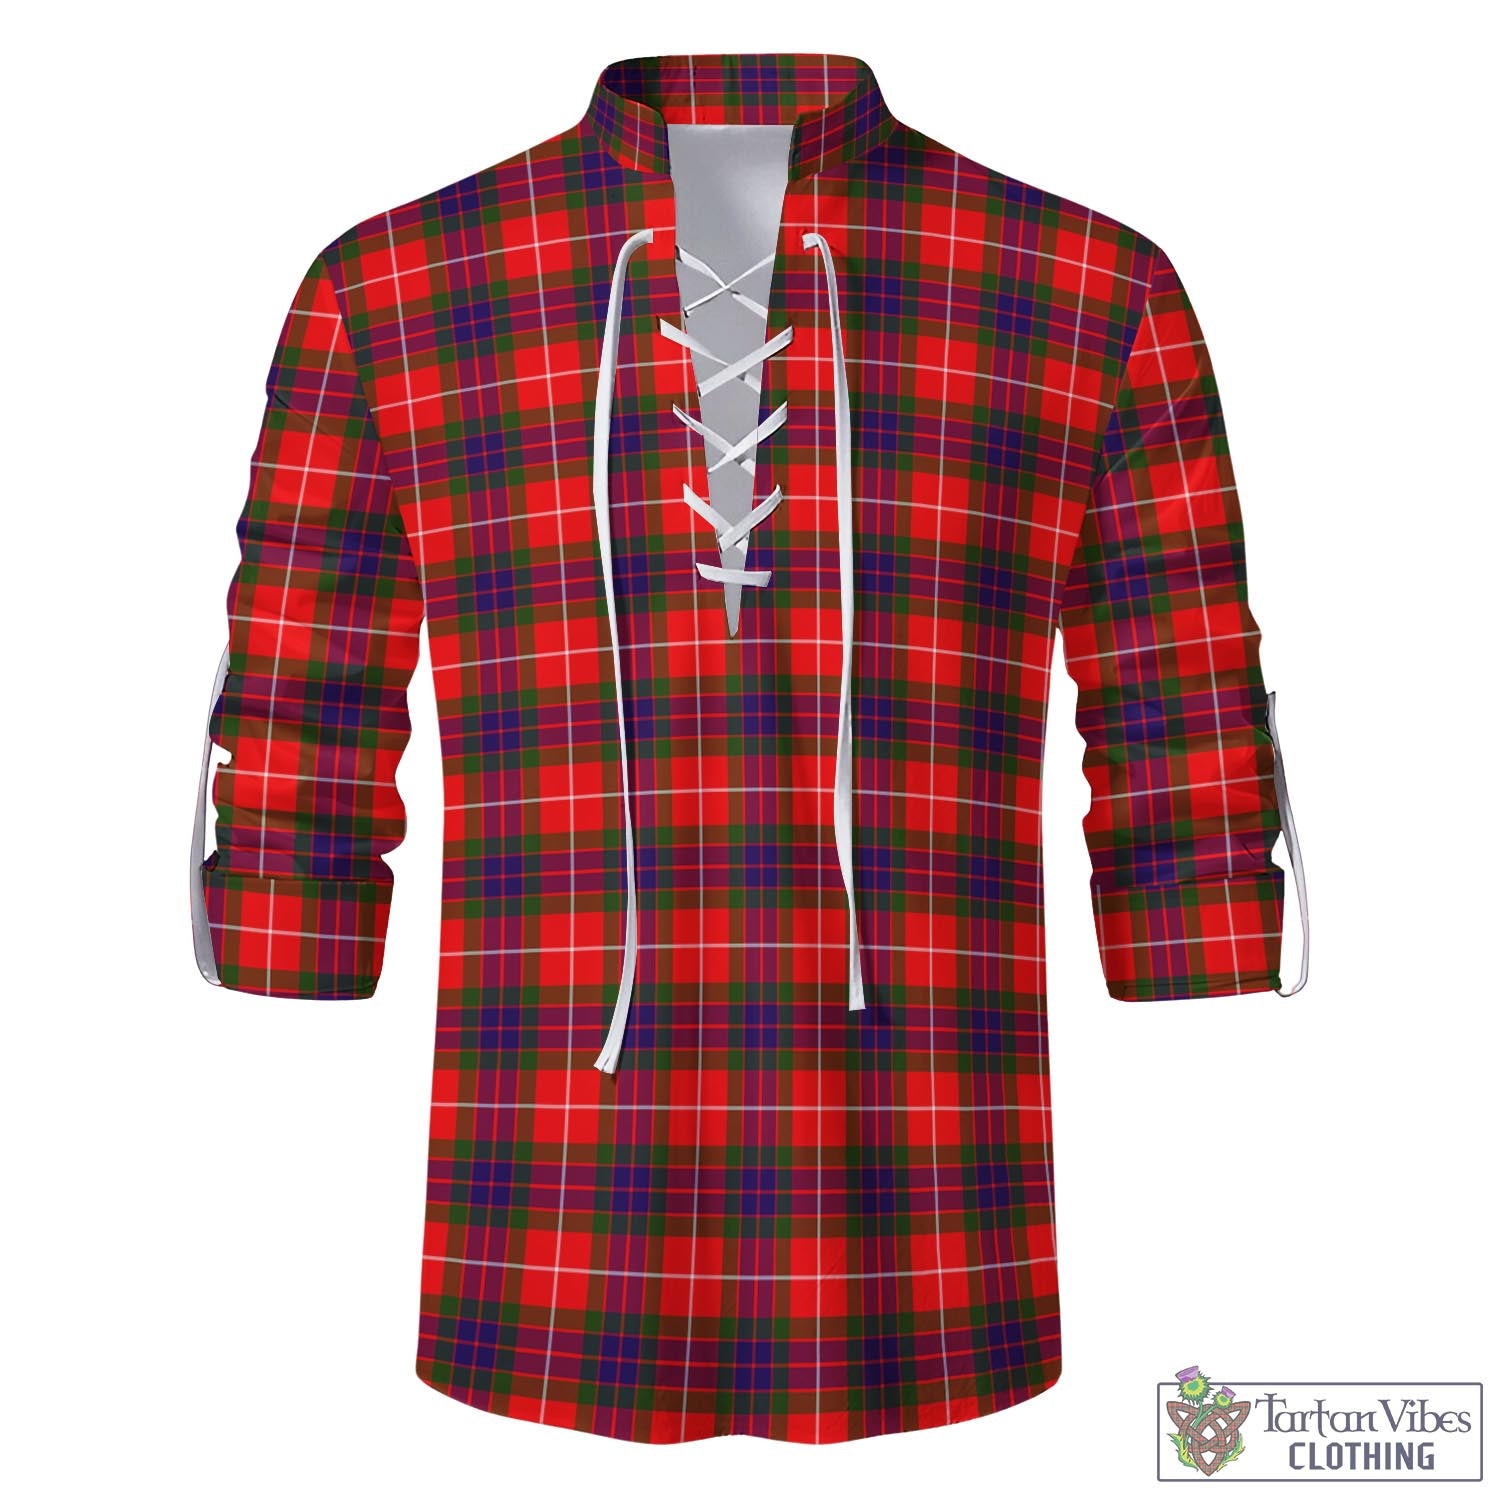 Tartan Vibes Clothing Abernethy Tartan Men's Scottish Traditional Jacobite Ghillie Kilt Shirt